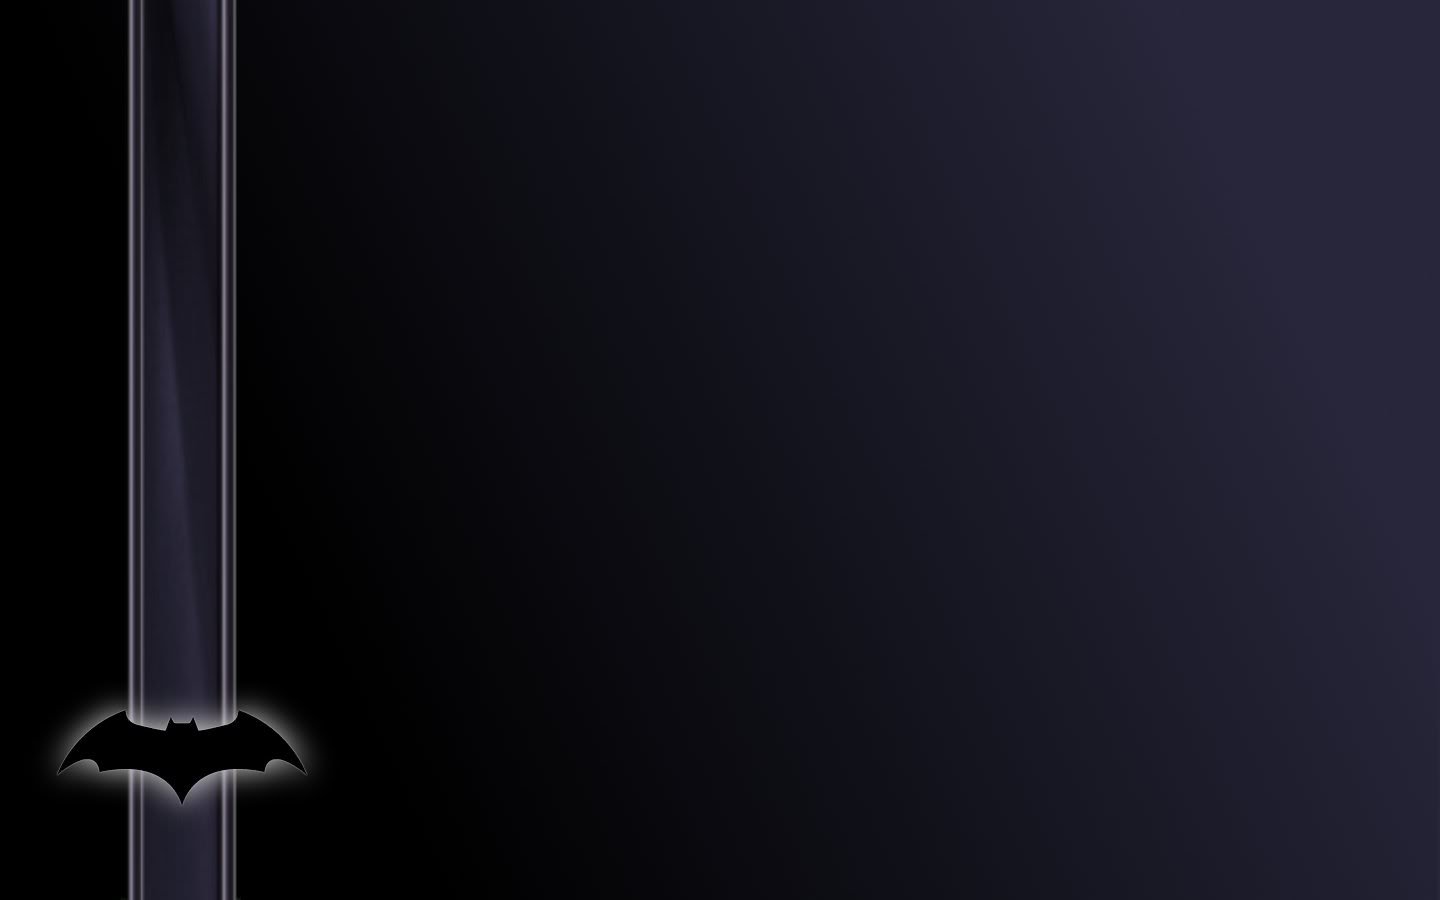 HEROOLOGYcom batman logo wallpaper desktop wallp 1440x900